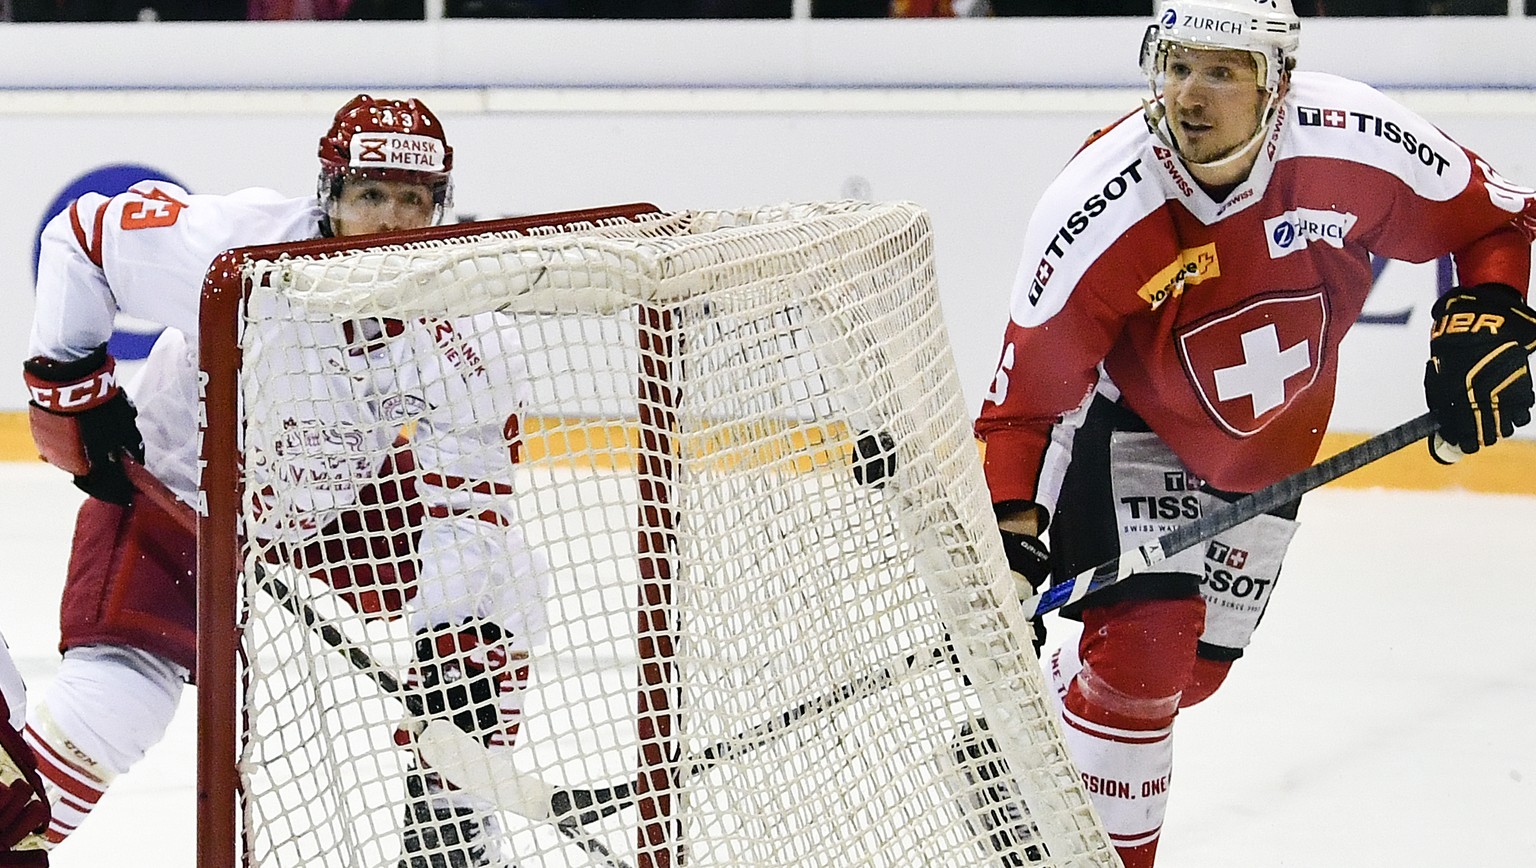 Switzerland’s Damien Brunner, right, scores to 2:1 against Denmark’s Nichlas Hardt during a friendly ice hockey game between Switzerland and Denmark, at the ice hall in La Chaux-de-Fonds, Switzerland, ...